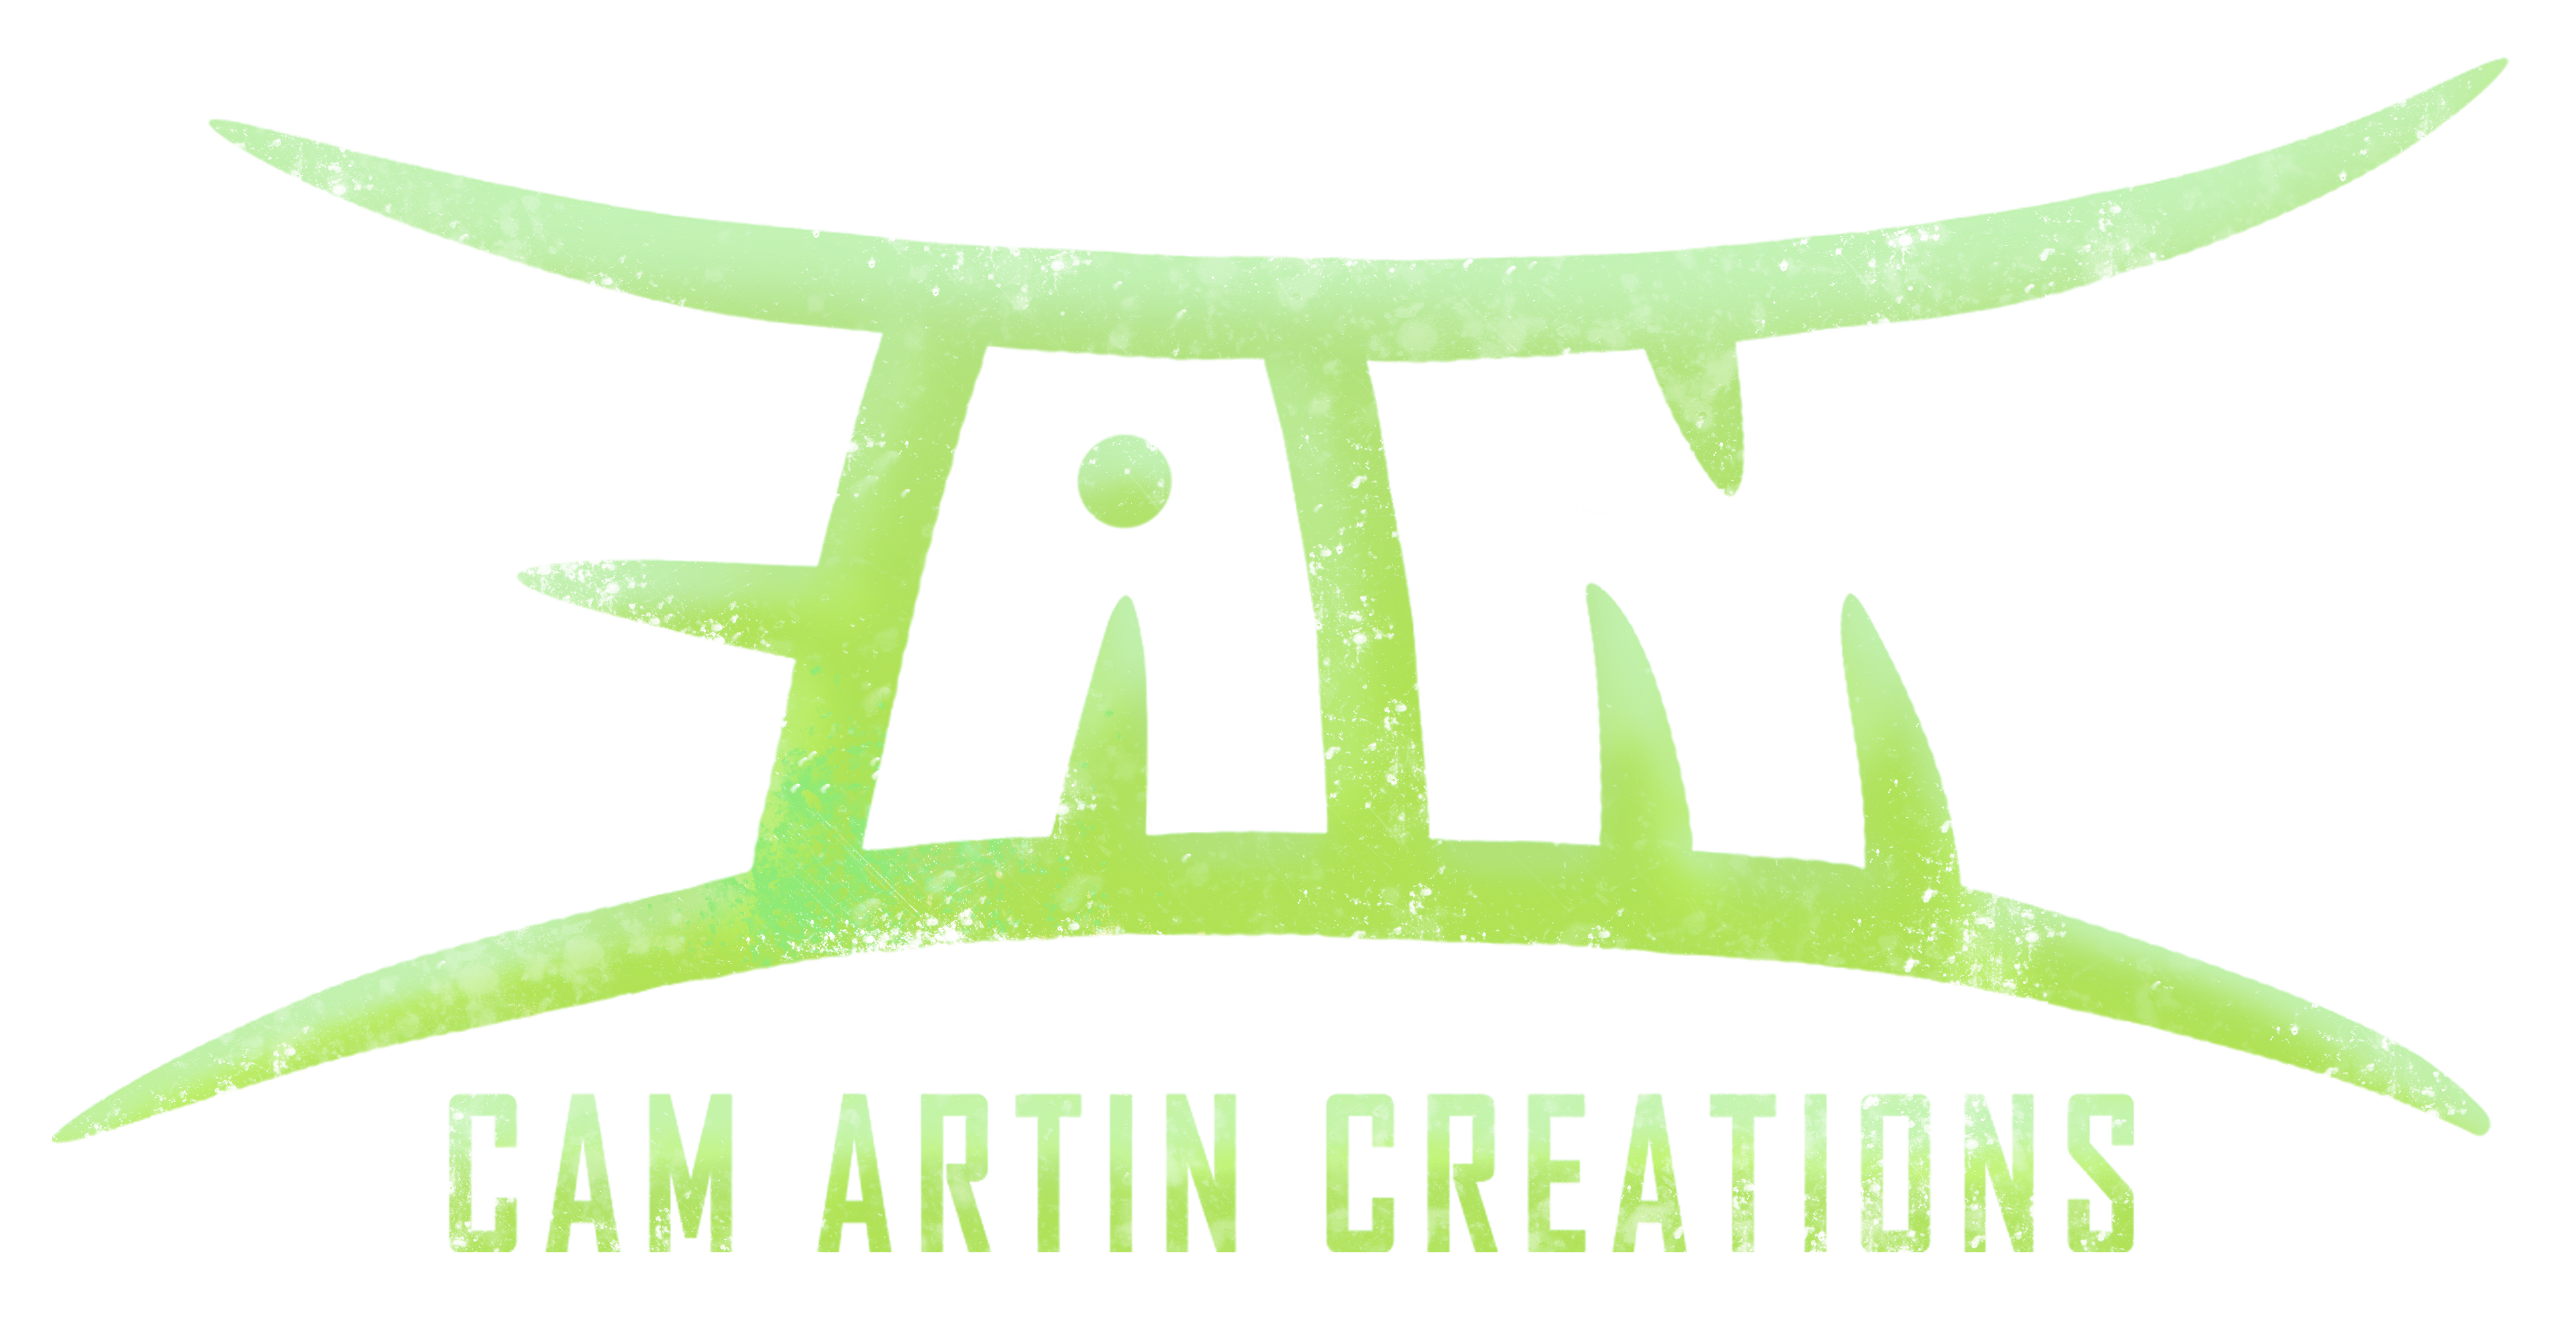 Cam Artin Creations